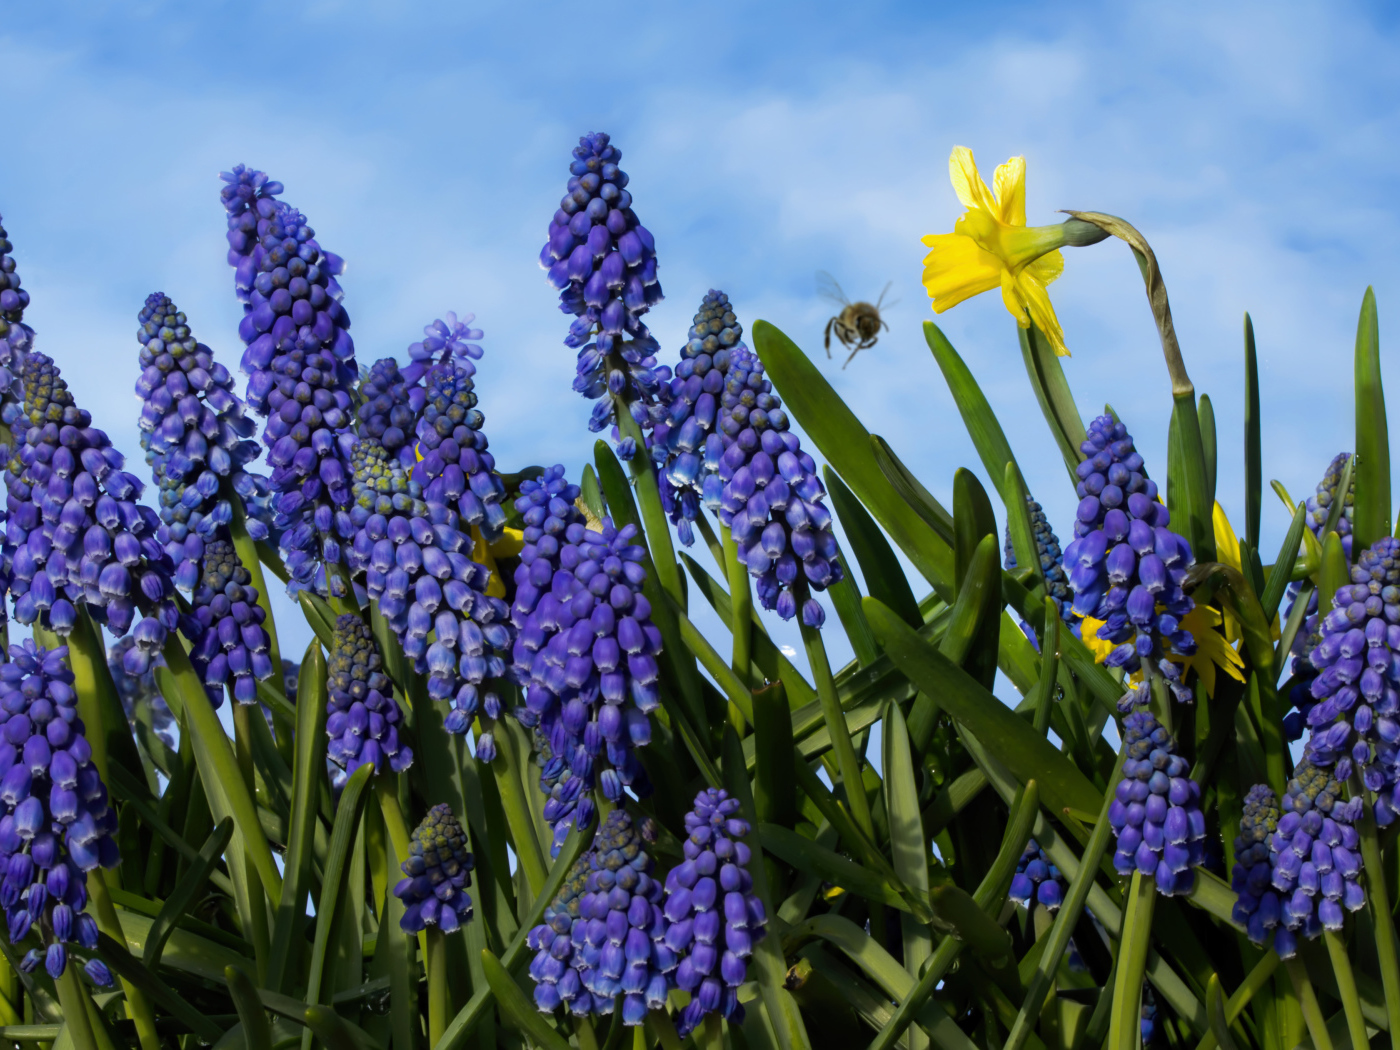 Blue muscari flowers against the blue sky